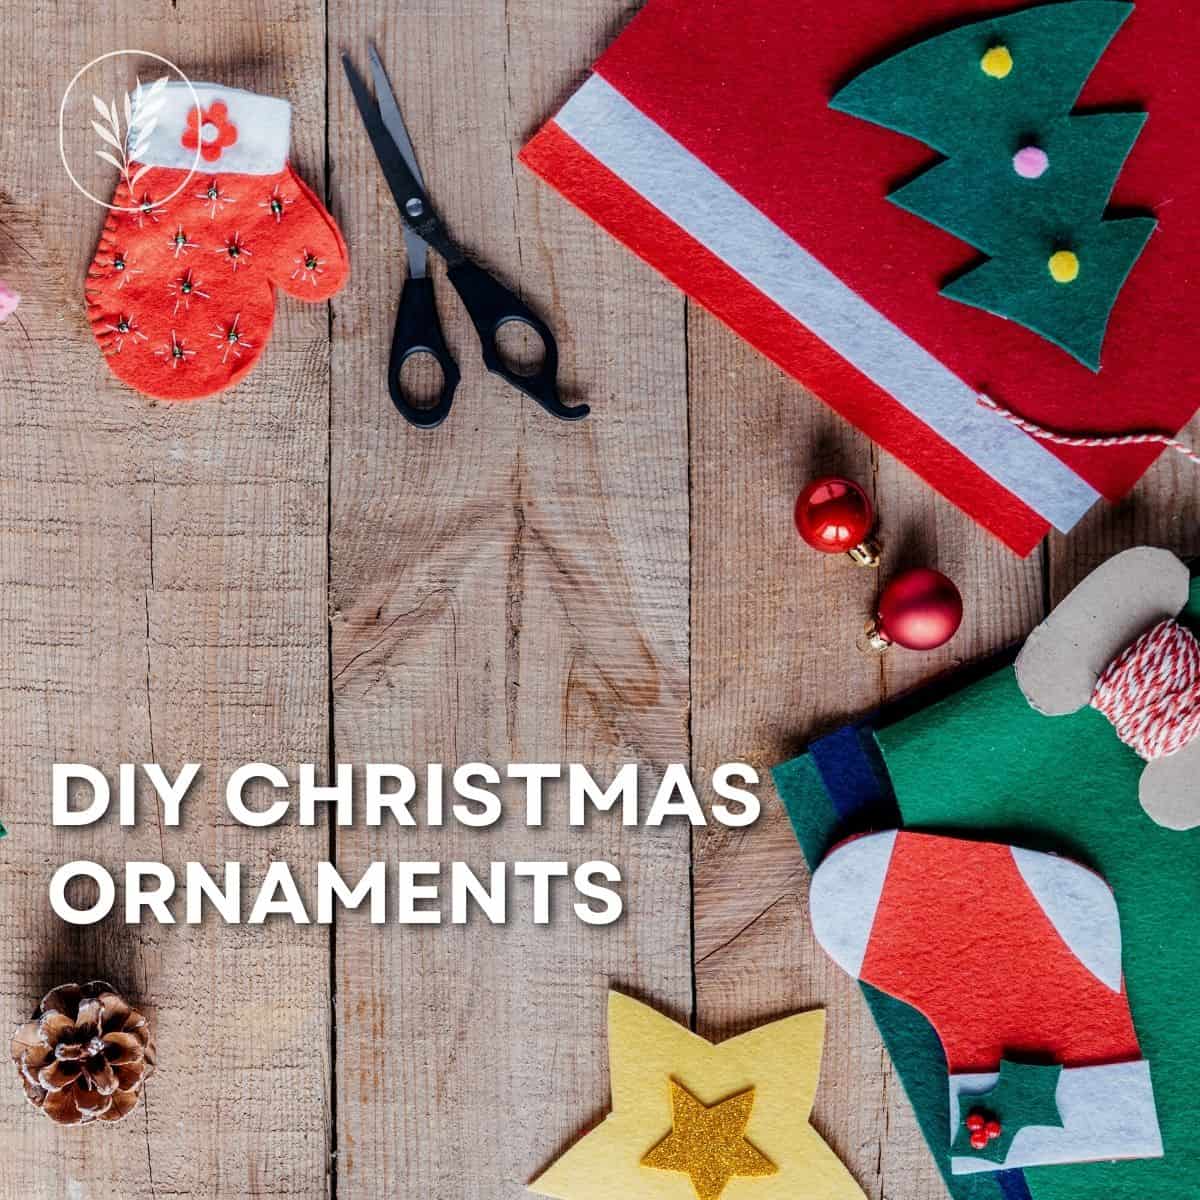 Diy christmas ornaments via @home4theharvest